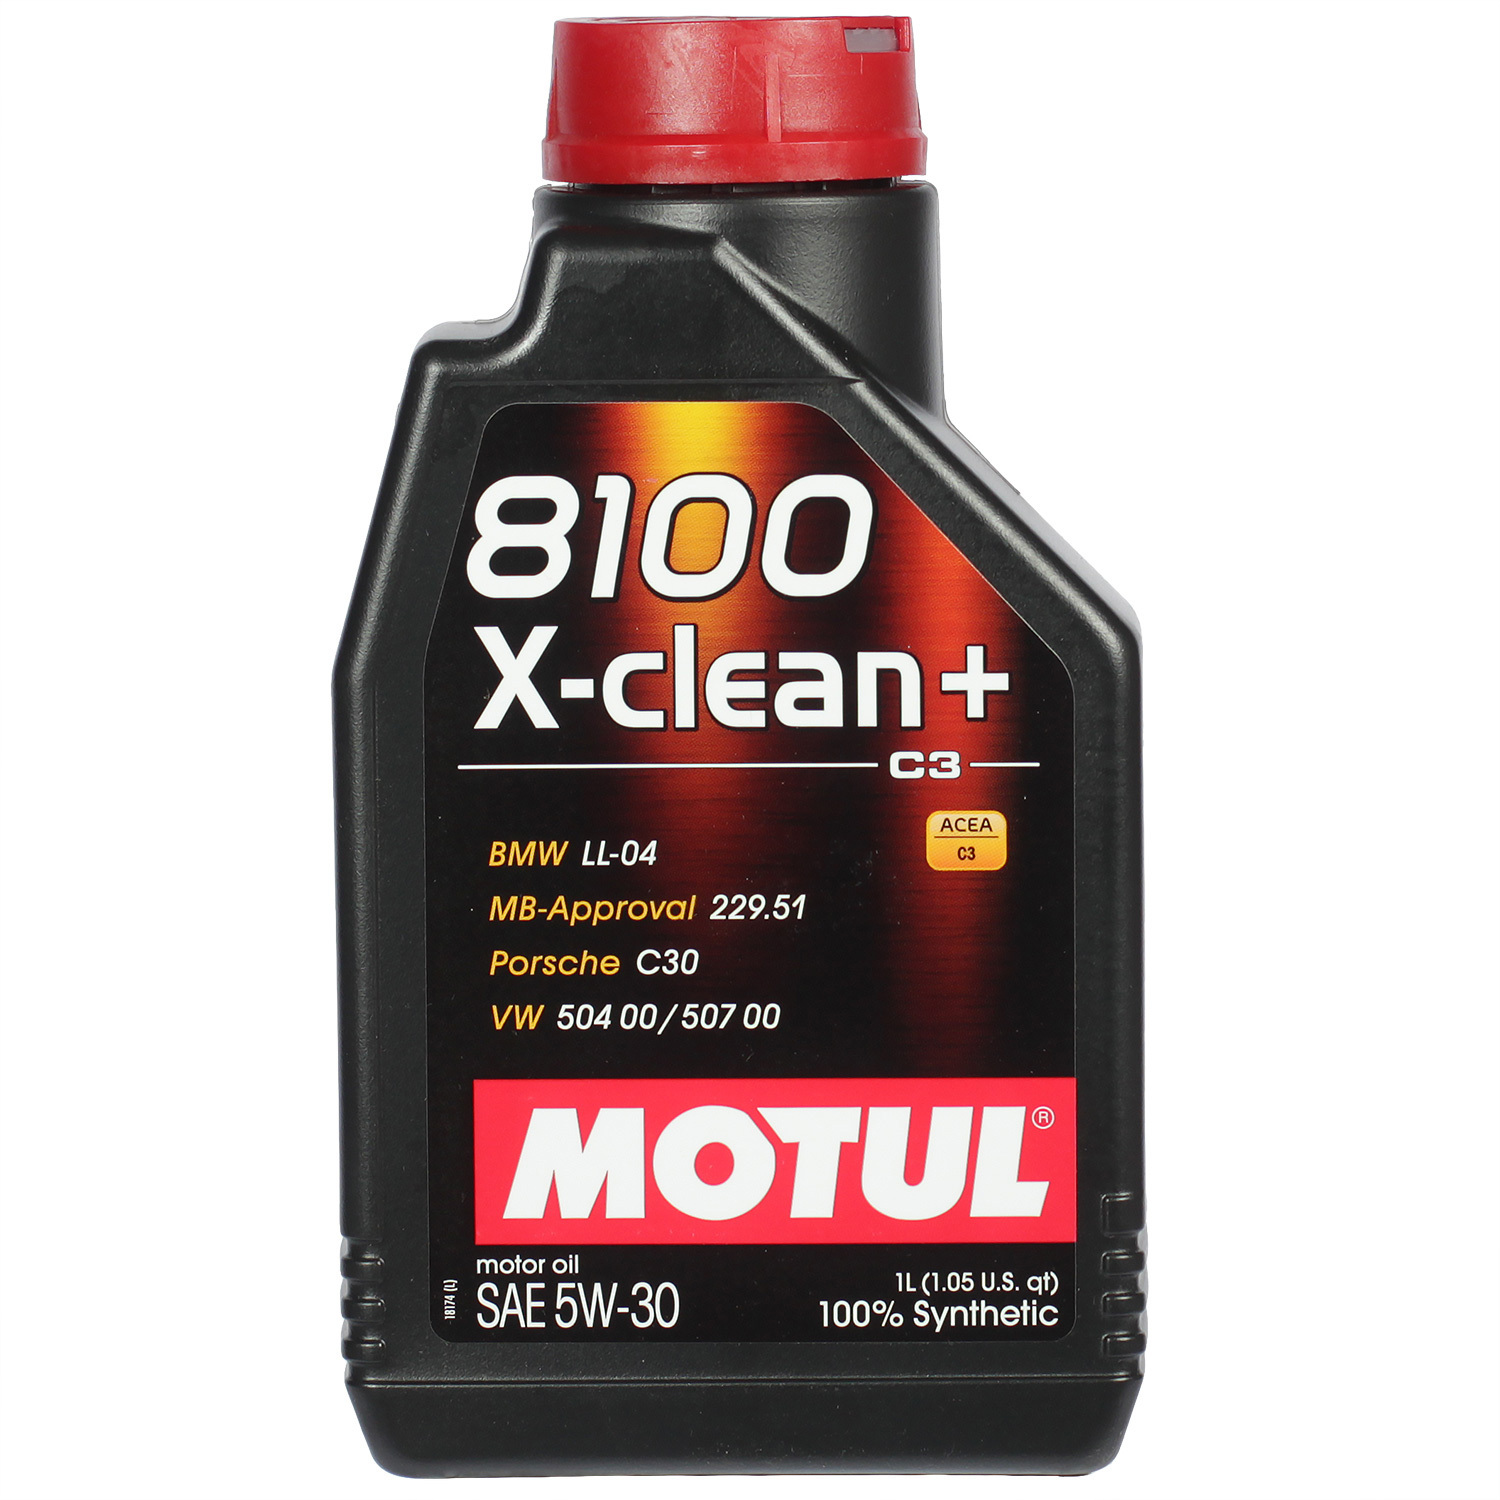 Motul Моторное масло Motul 8100 X-clean+ 5W-30, 1 л масло моторное motul 106280